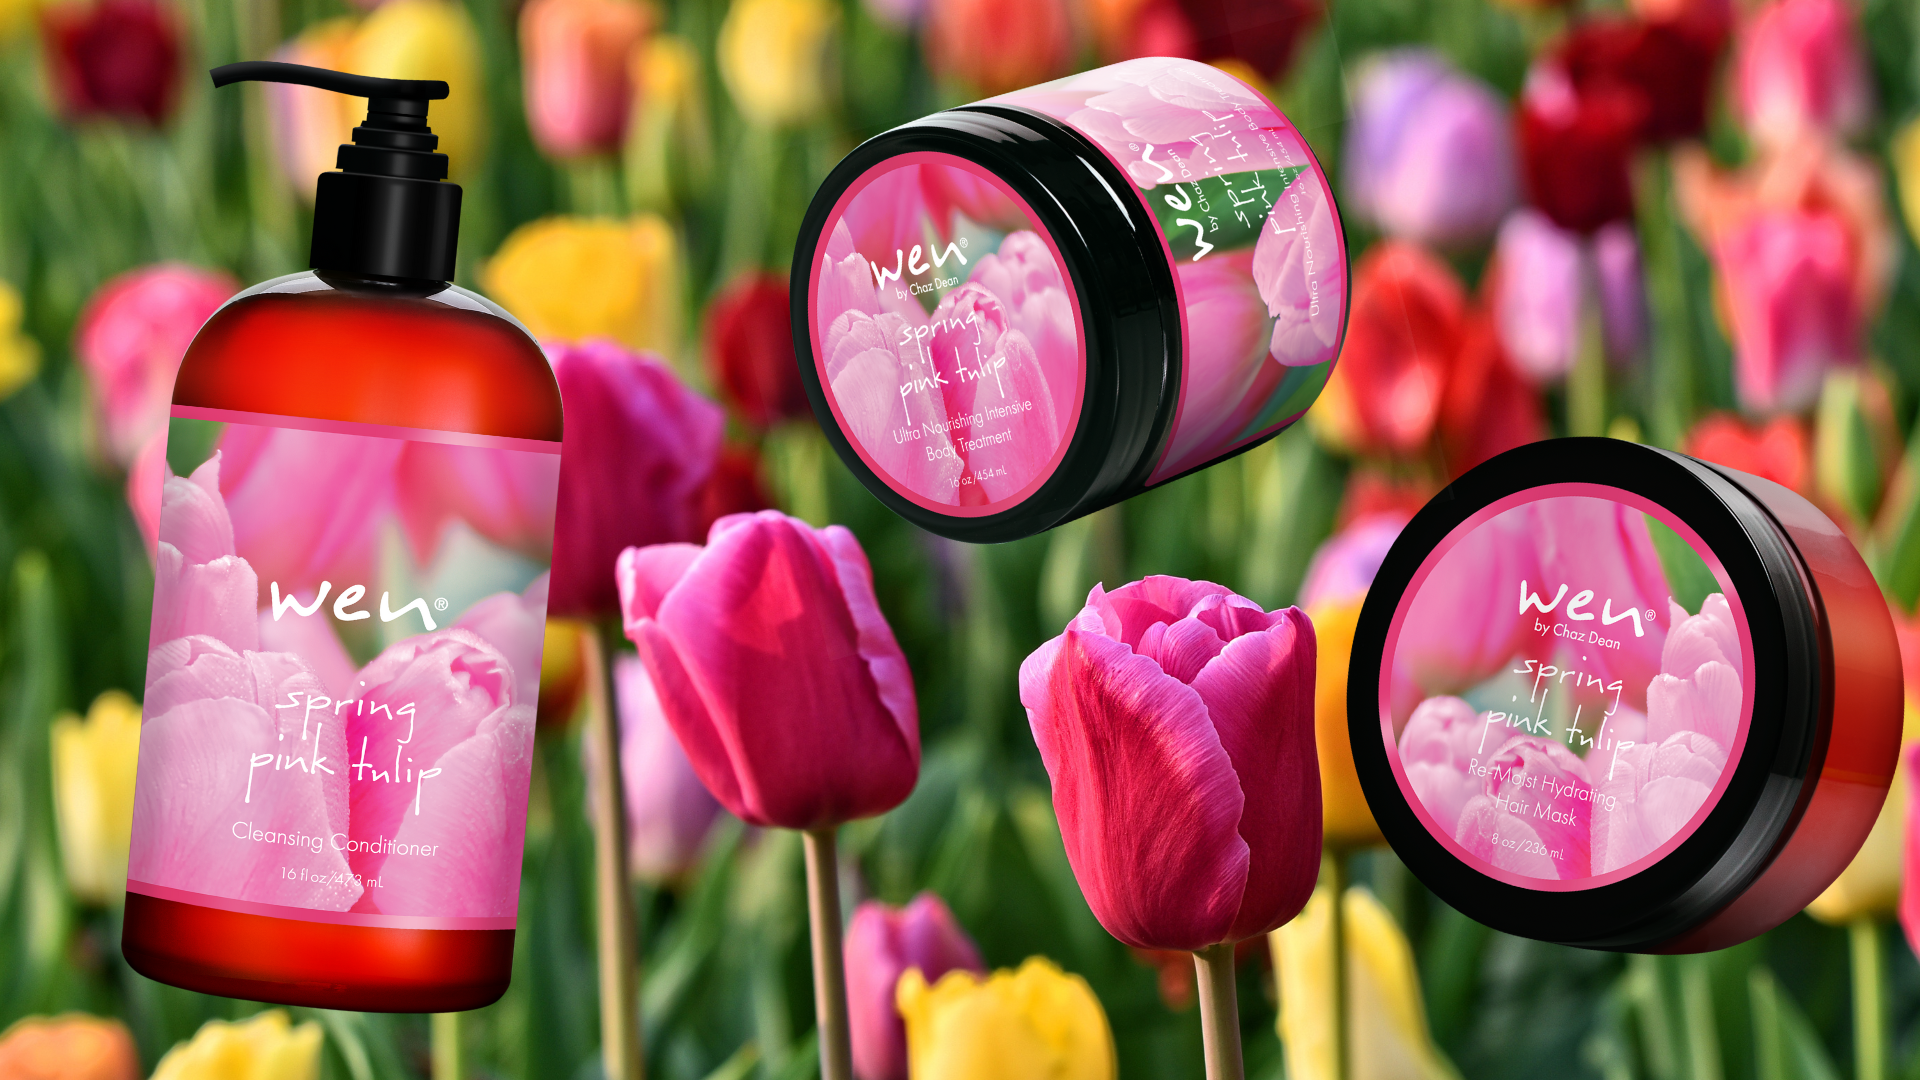 chaz dean, wen spring pink tulip conditioner, cleansing conditioner